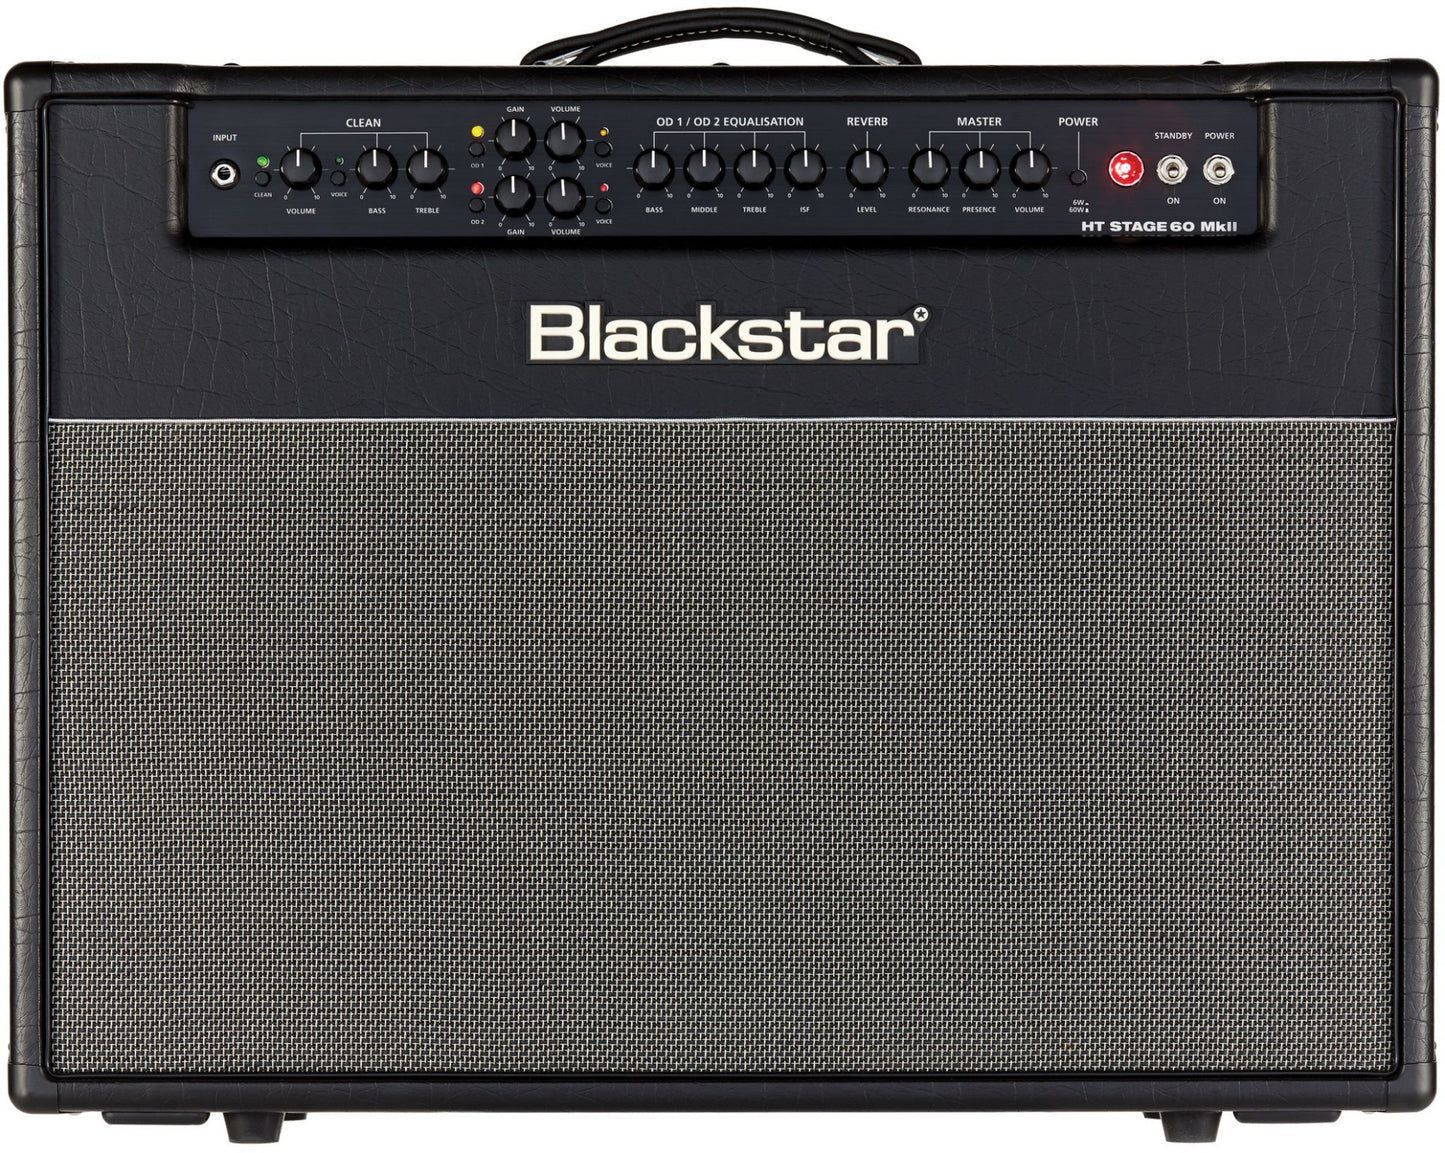 Blackstar HT Stage 60 212 Venue Series 60W 2x12" Tube Guitar Amp (Stage602MKII)